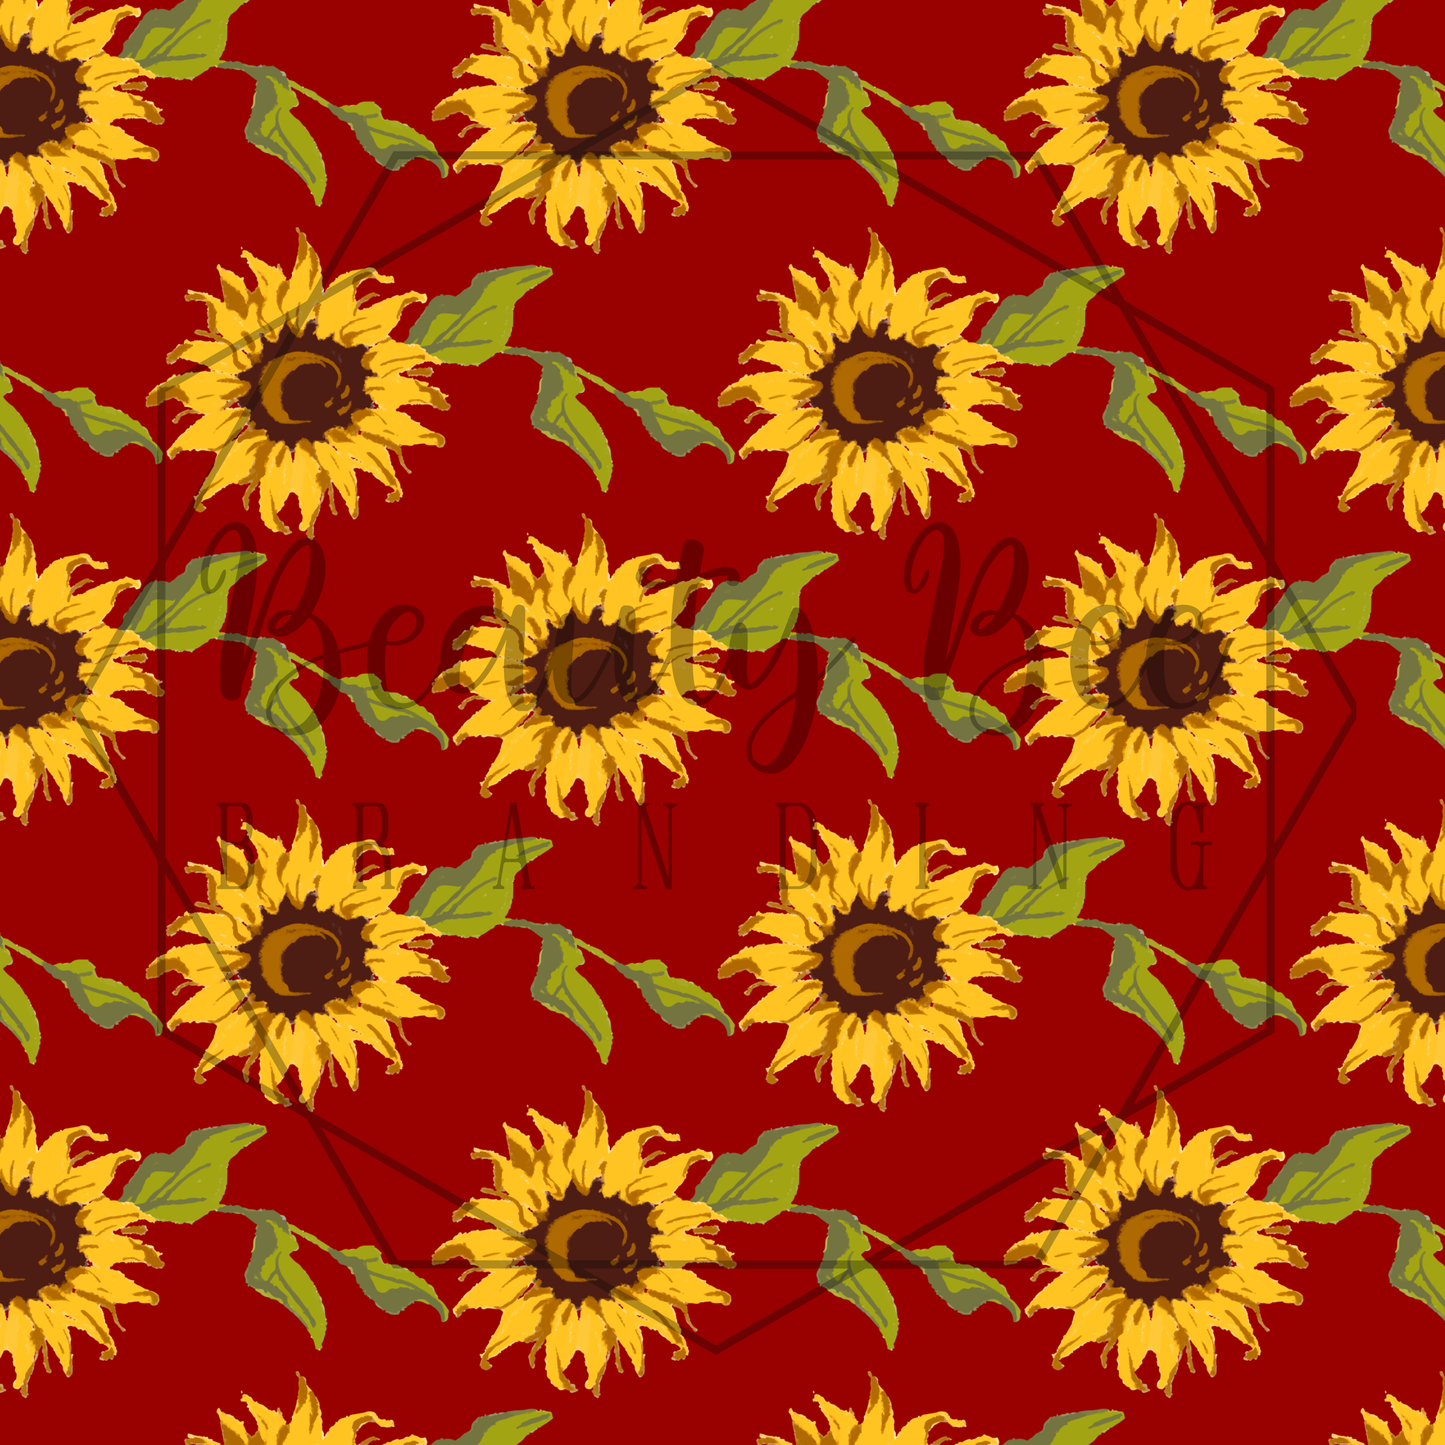 Sunflowers Red Small SEAMLESS PATTERN